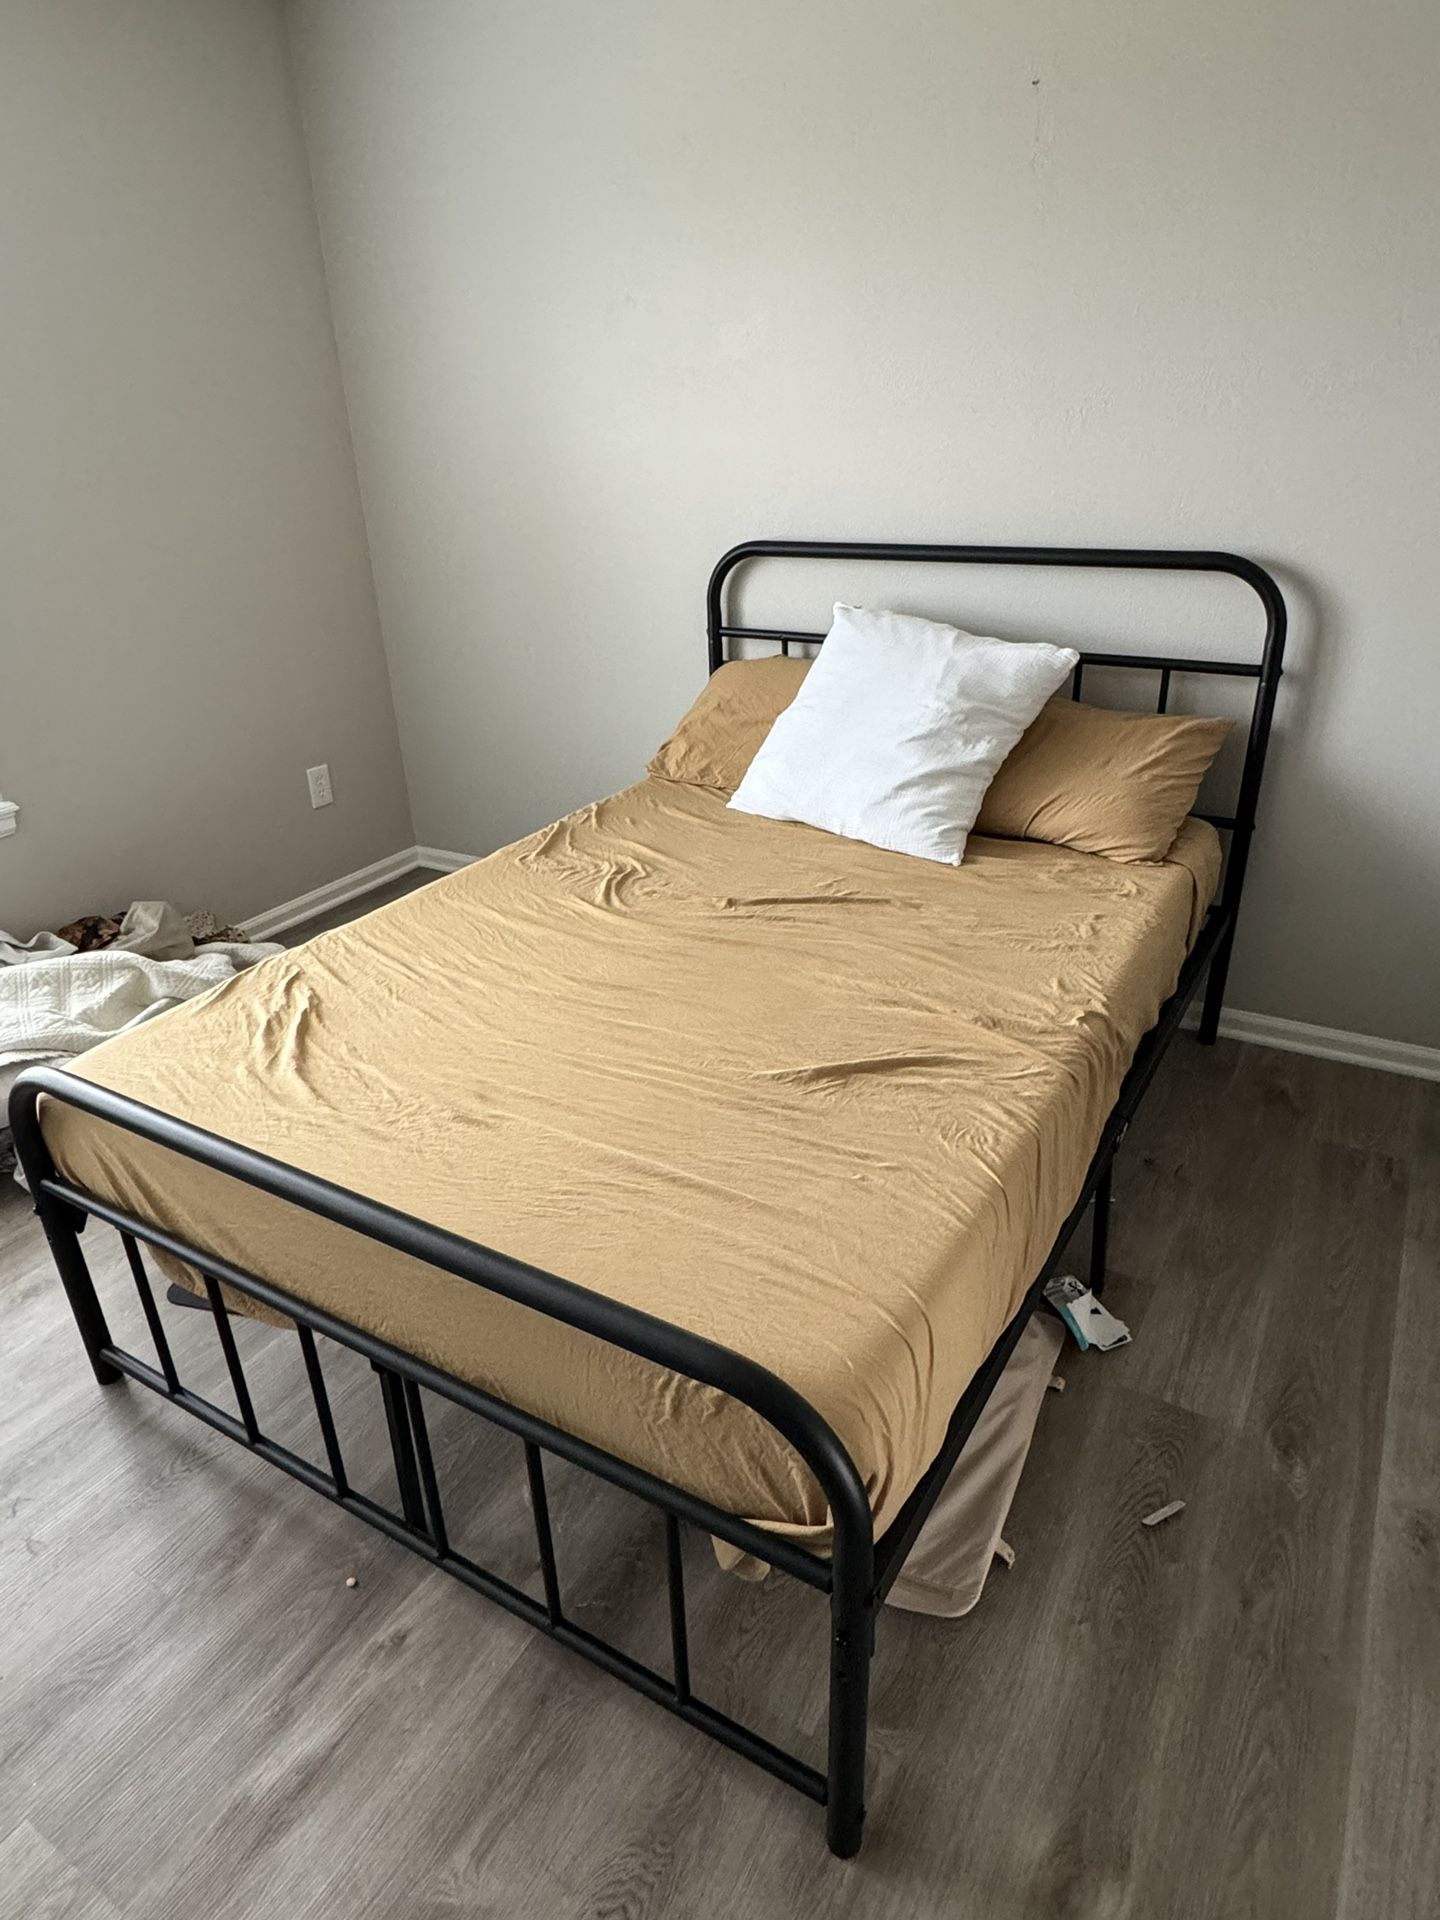 Full Size Bed Frame W/ Mattress 